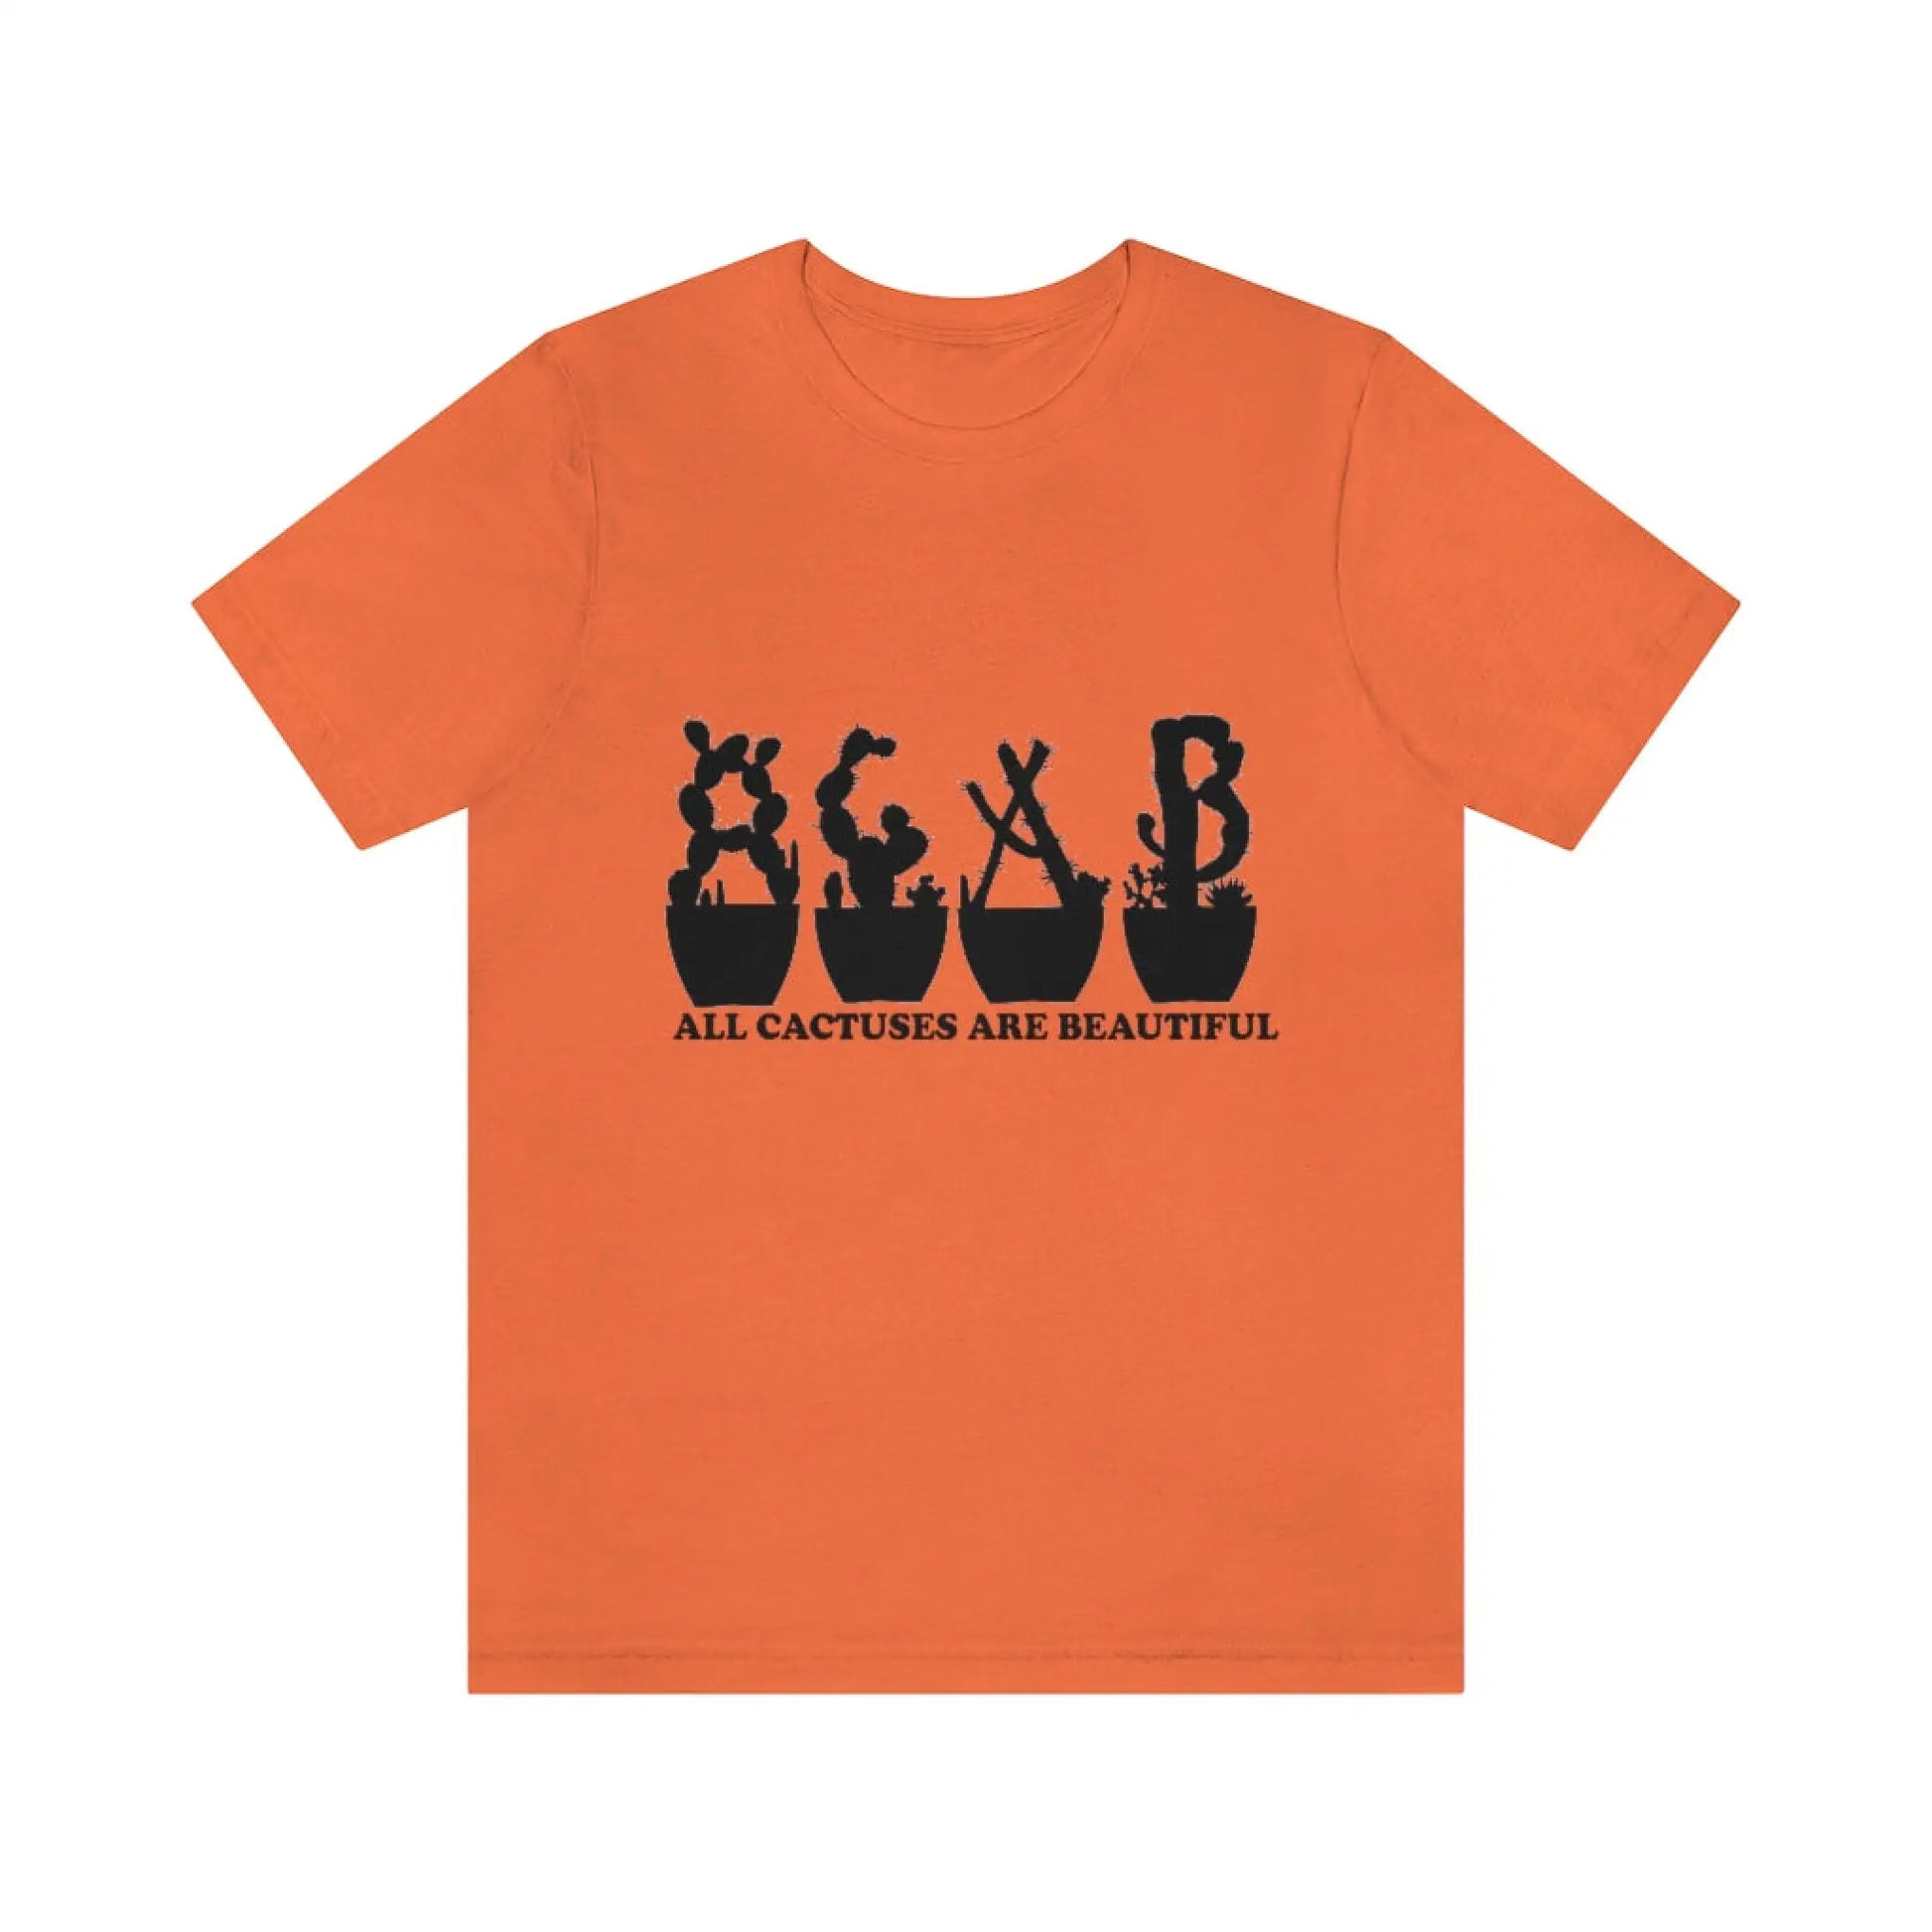 Shirts - All Cactuses Are Beautiful - Orange / S - T-Shirt